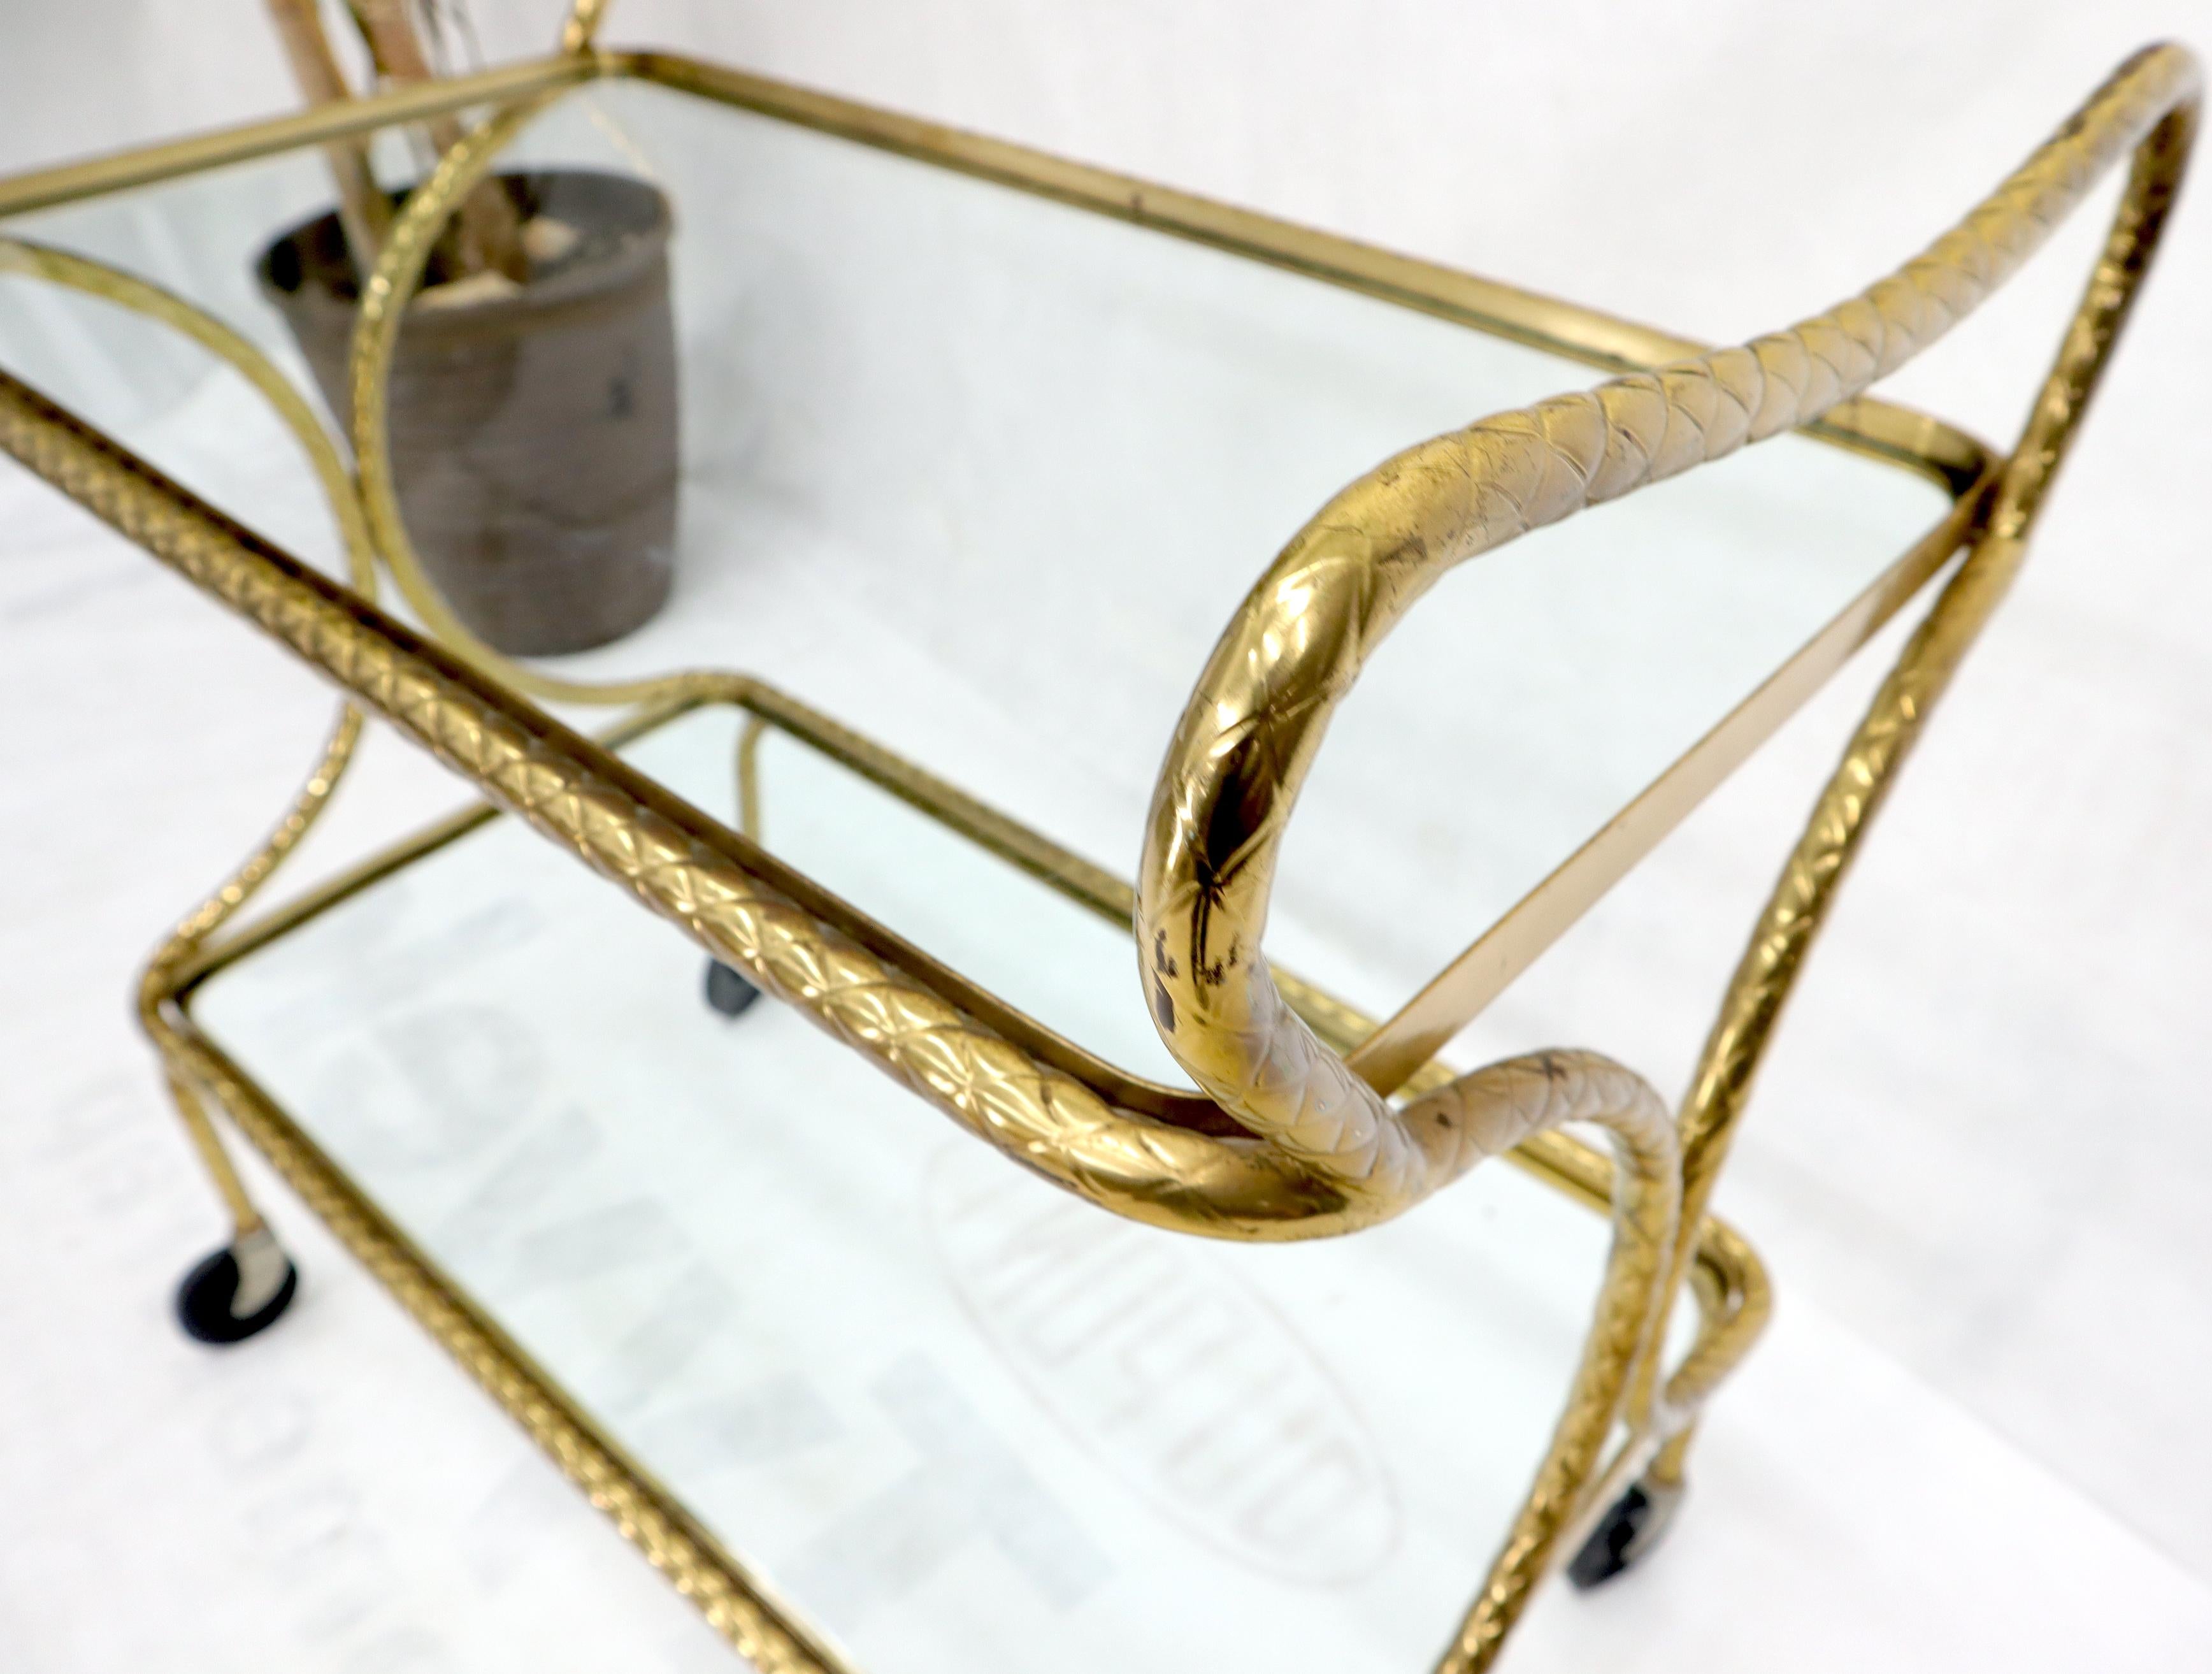 Mid-Century Modern bent embossed or textured brass tube frame glass top serving tea or bar cart.